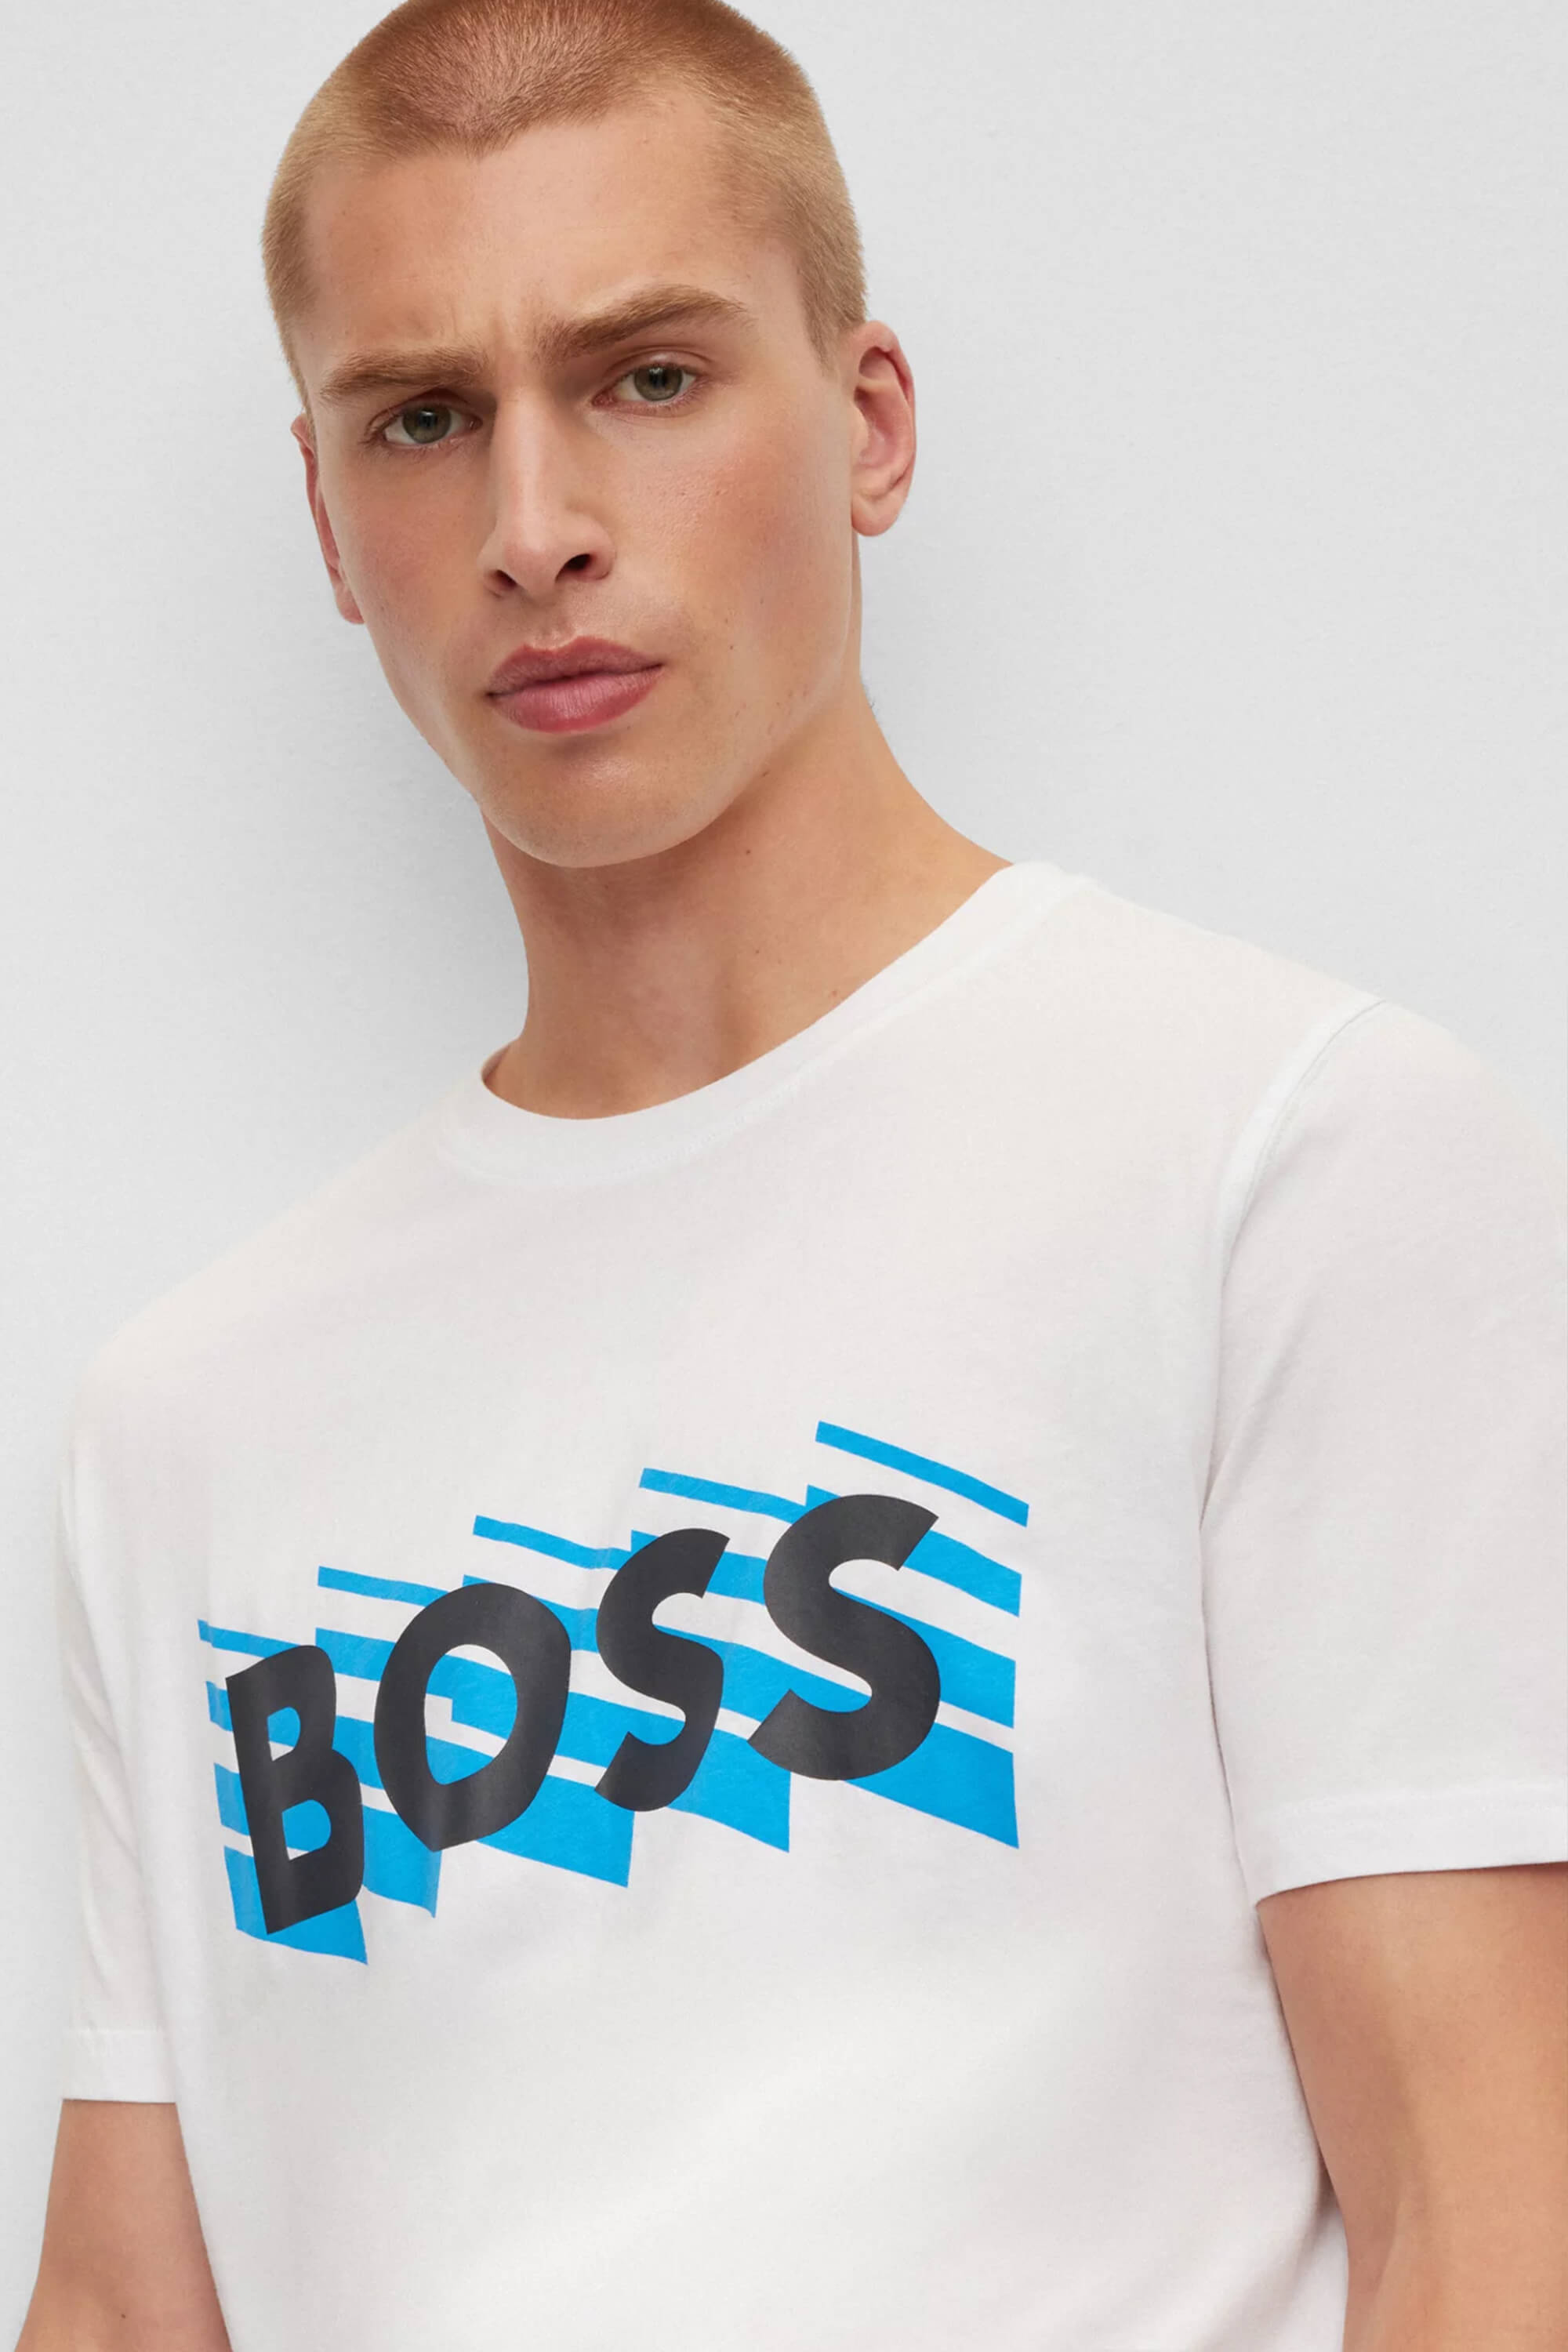 Hugo Boss TeeBOSSRete T-Shirt Natural